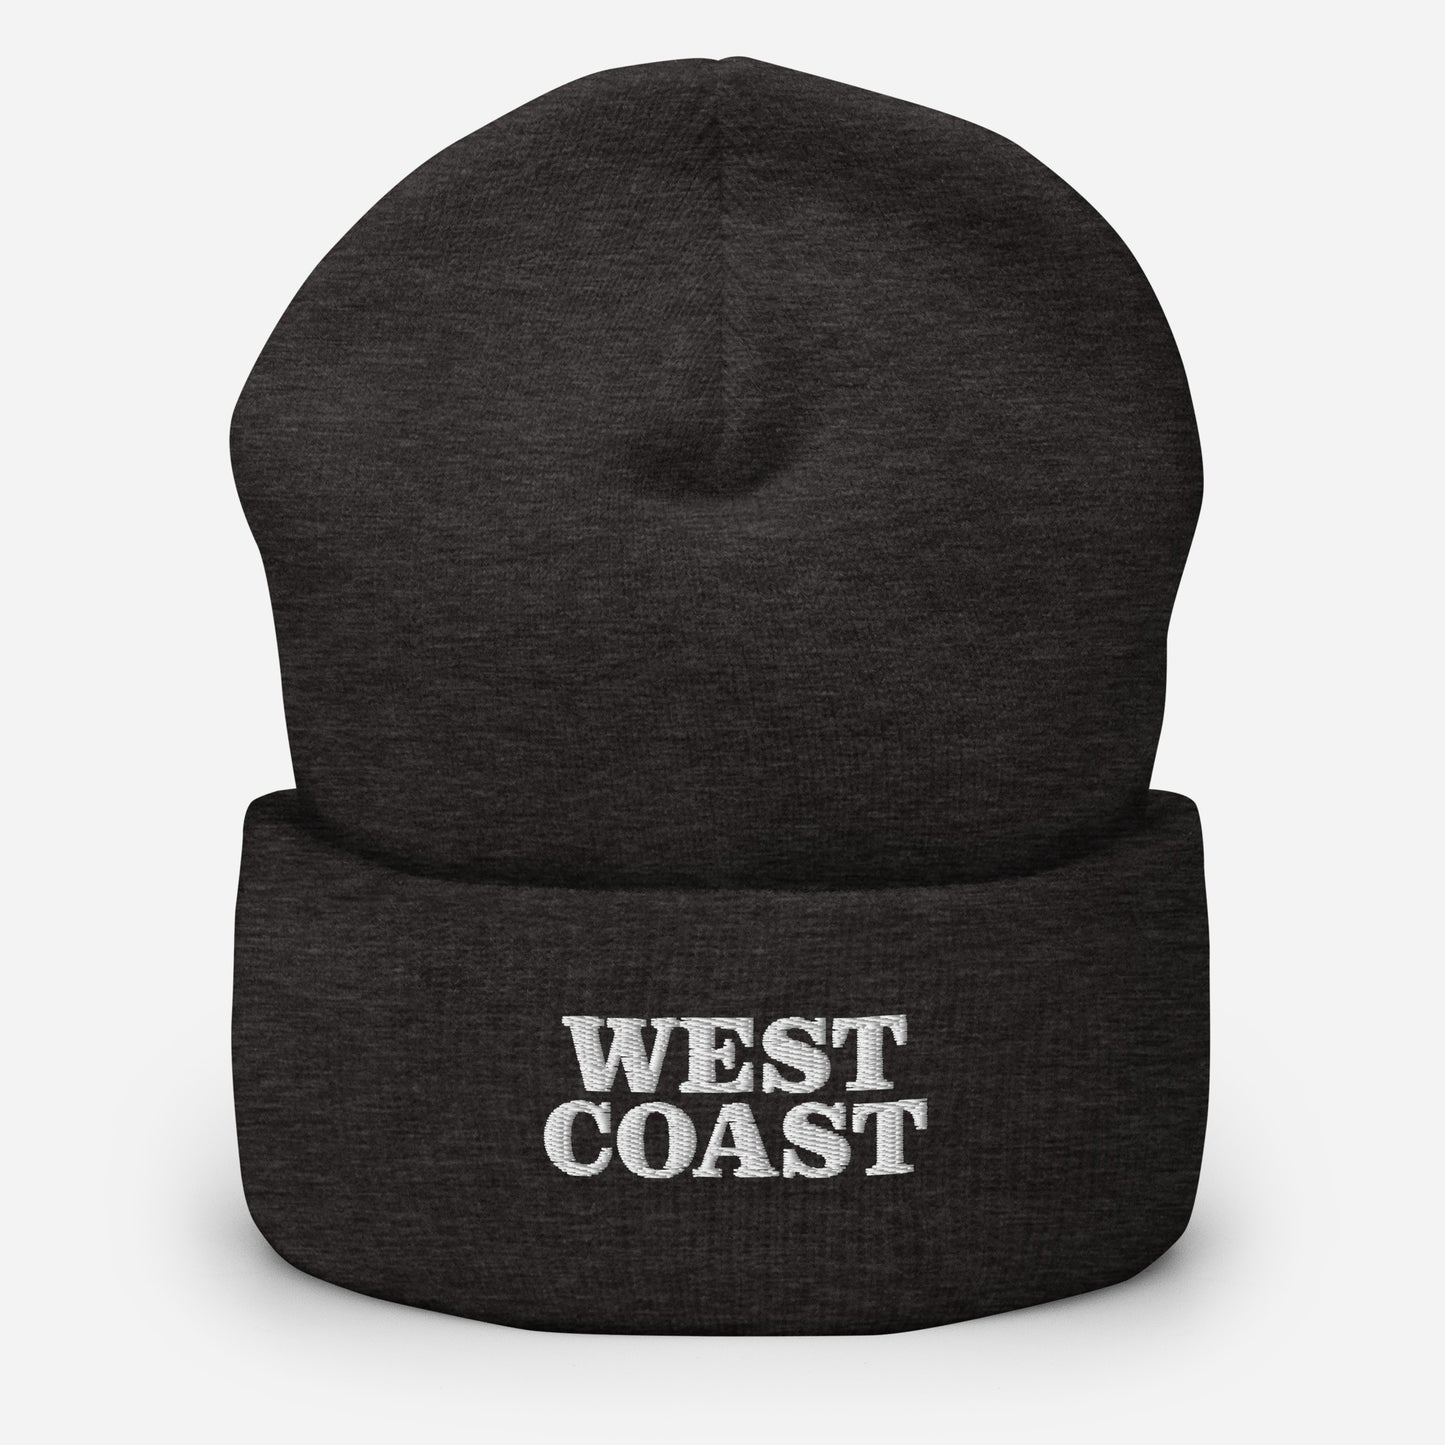 West Coast | Cuffed Beanie | Embroidered